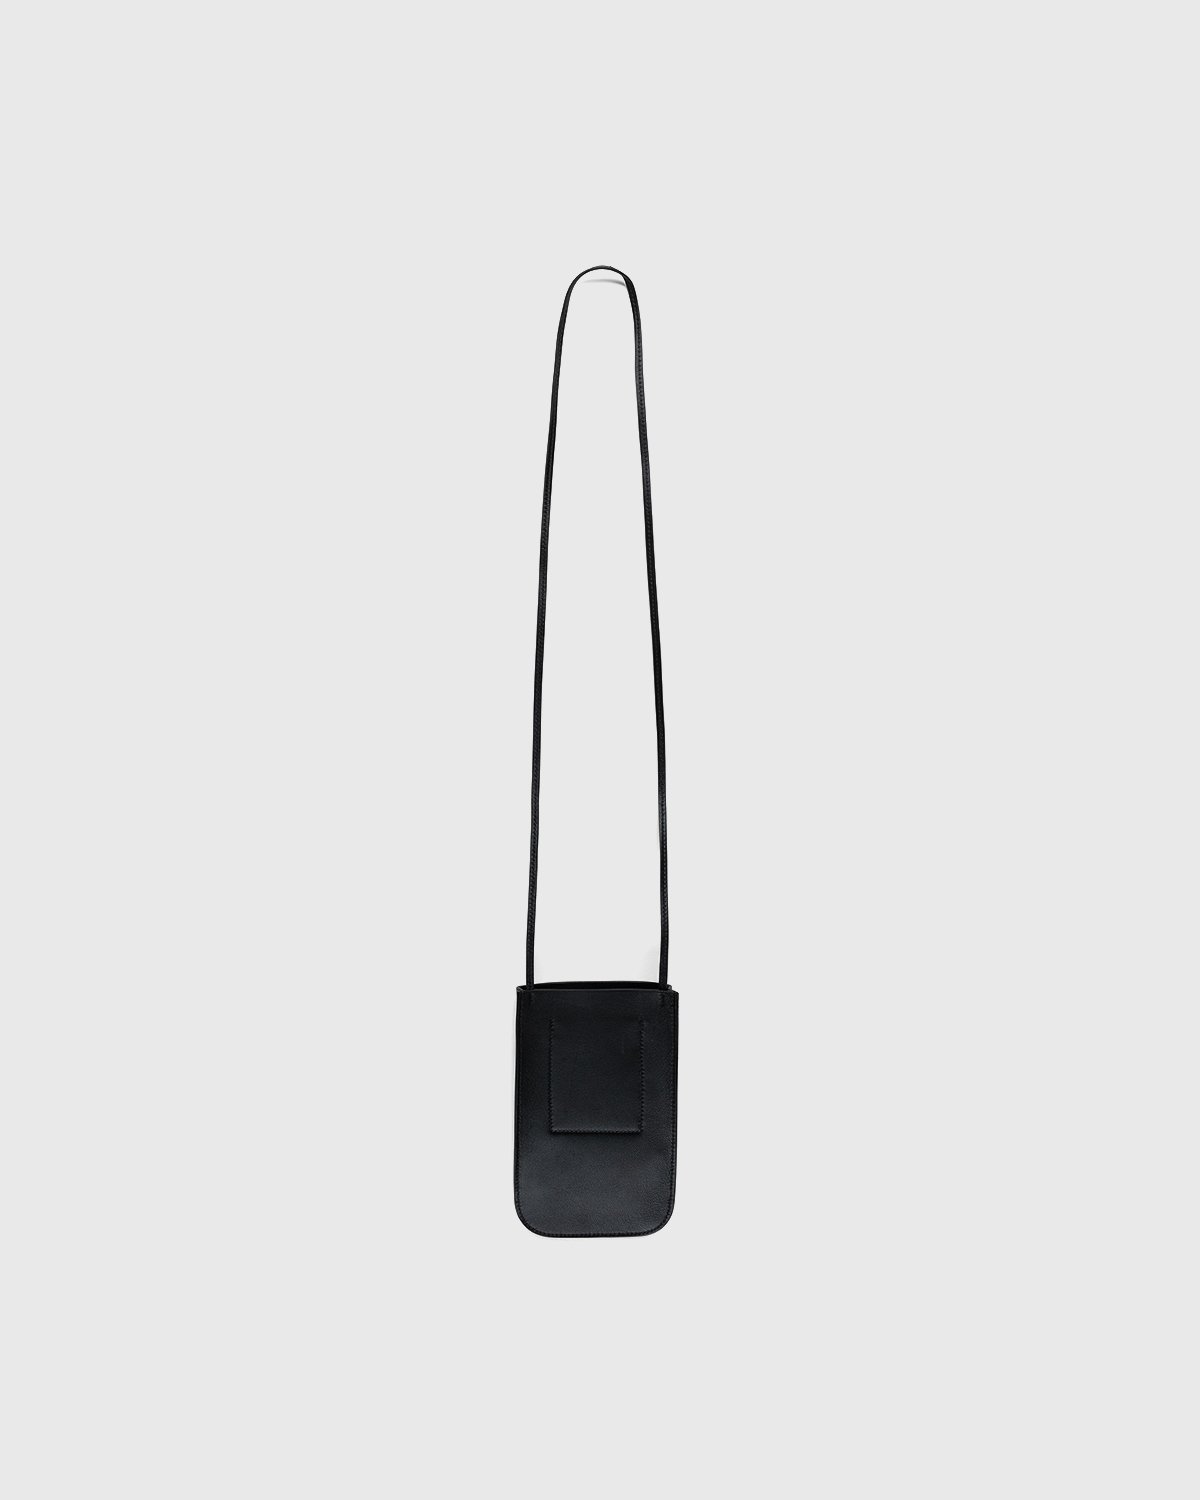 Jil Sander - Leather Phone Holder Pouch Black - Lifestyle - Black - Image 2